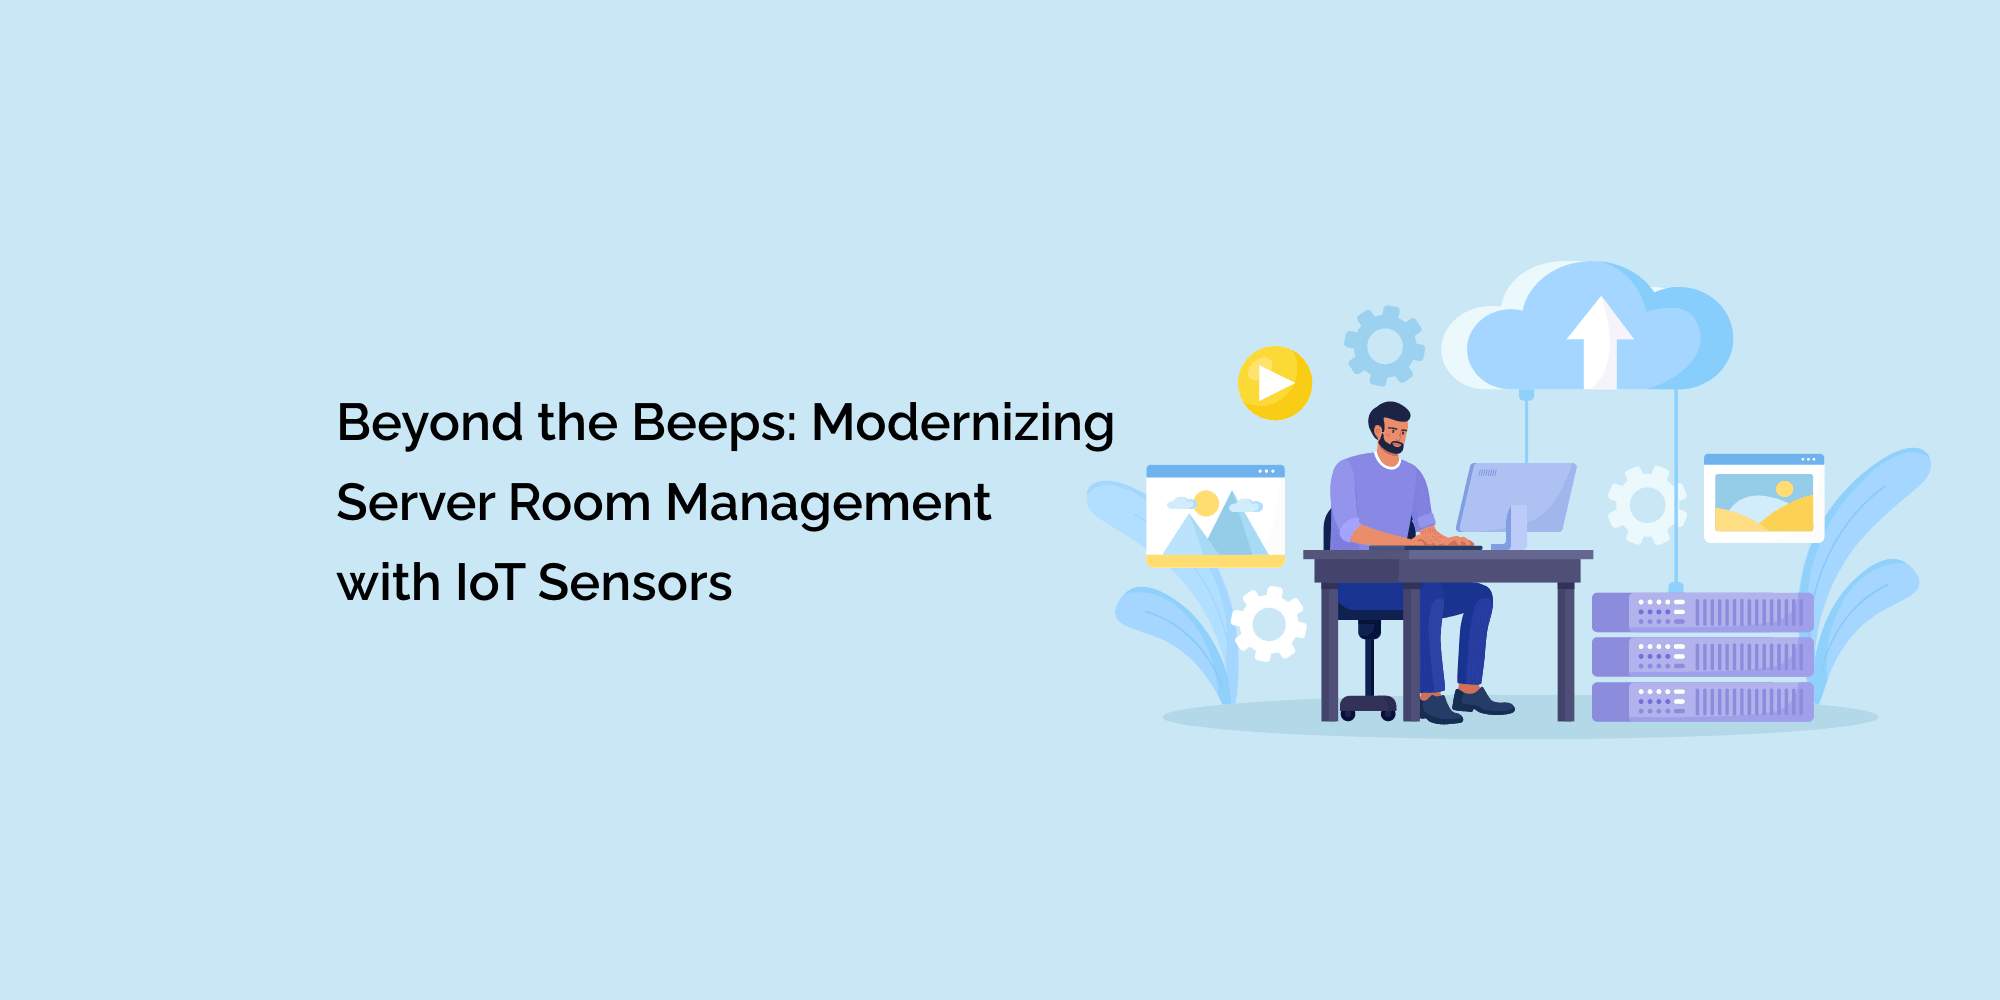 Beyond the Beeps: Modernizing Server Room Management with IoT Sensors